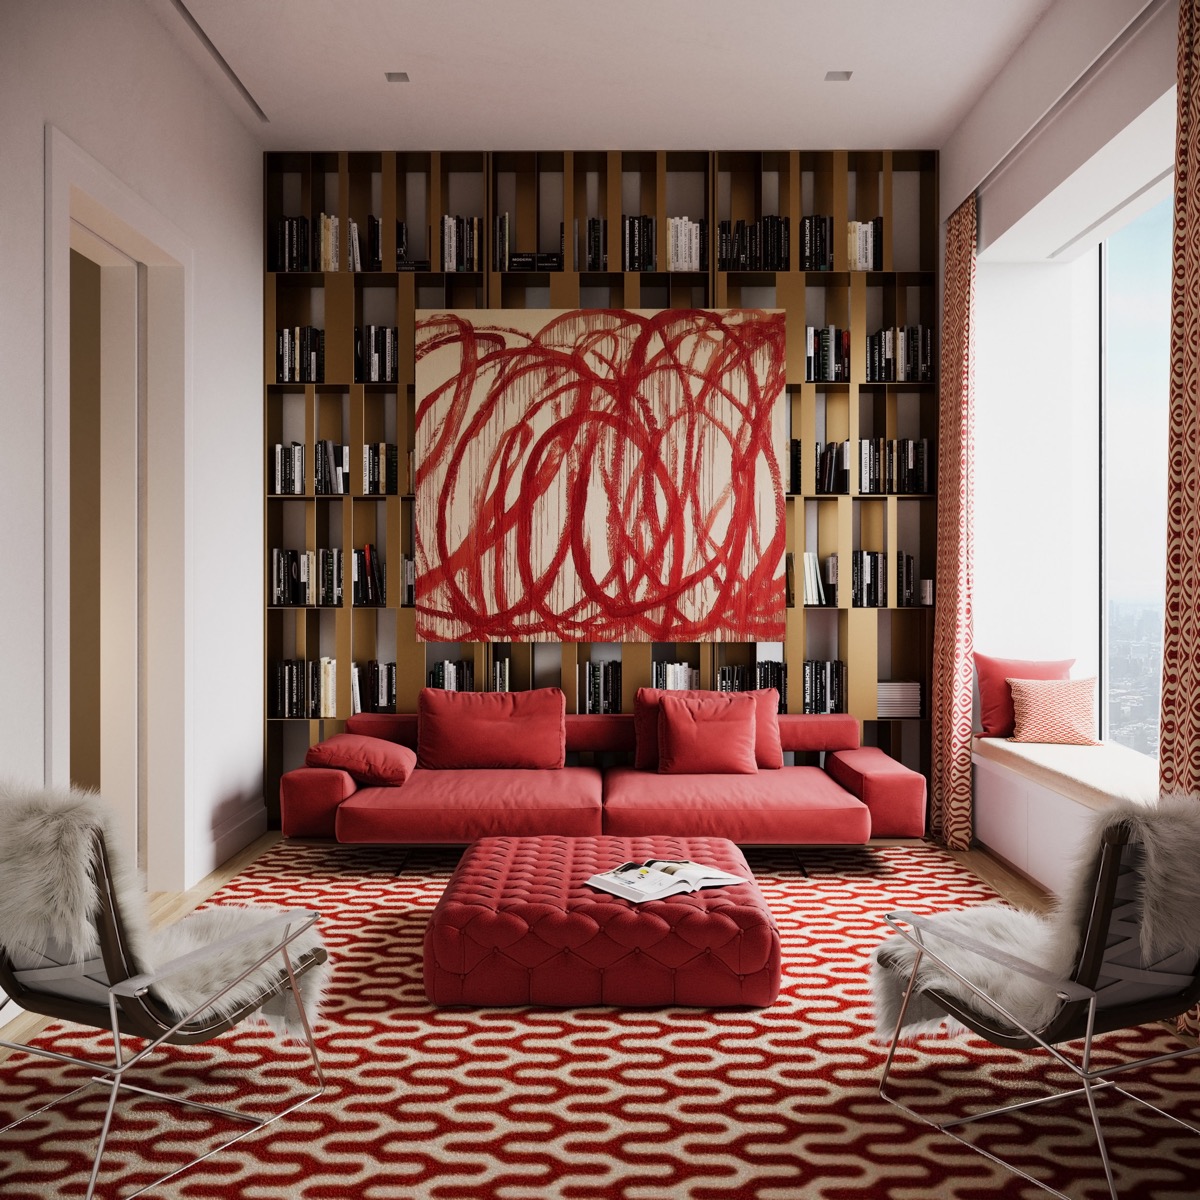 https://www.home-designing.com/wp-content/uploads/2020/03/red-carpet-living-room.jpg